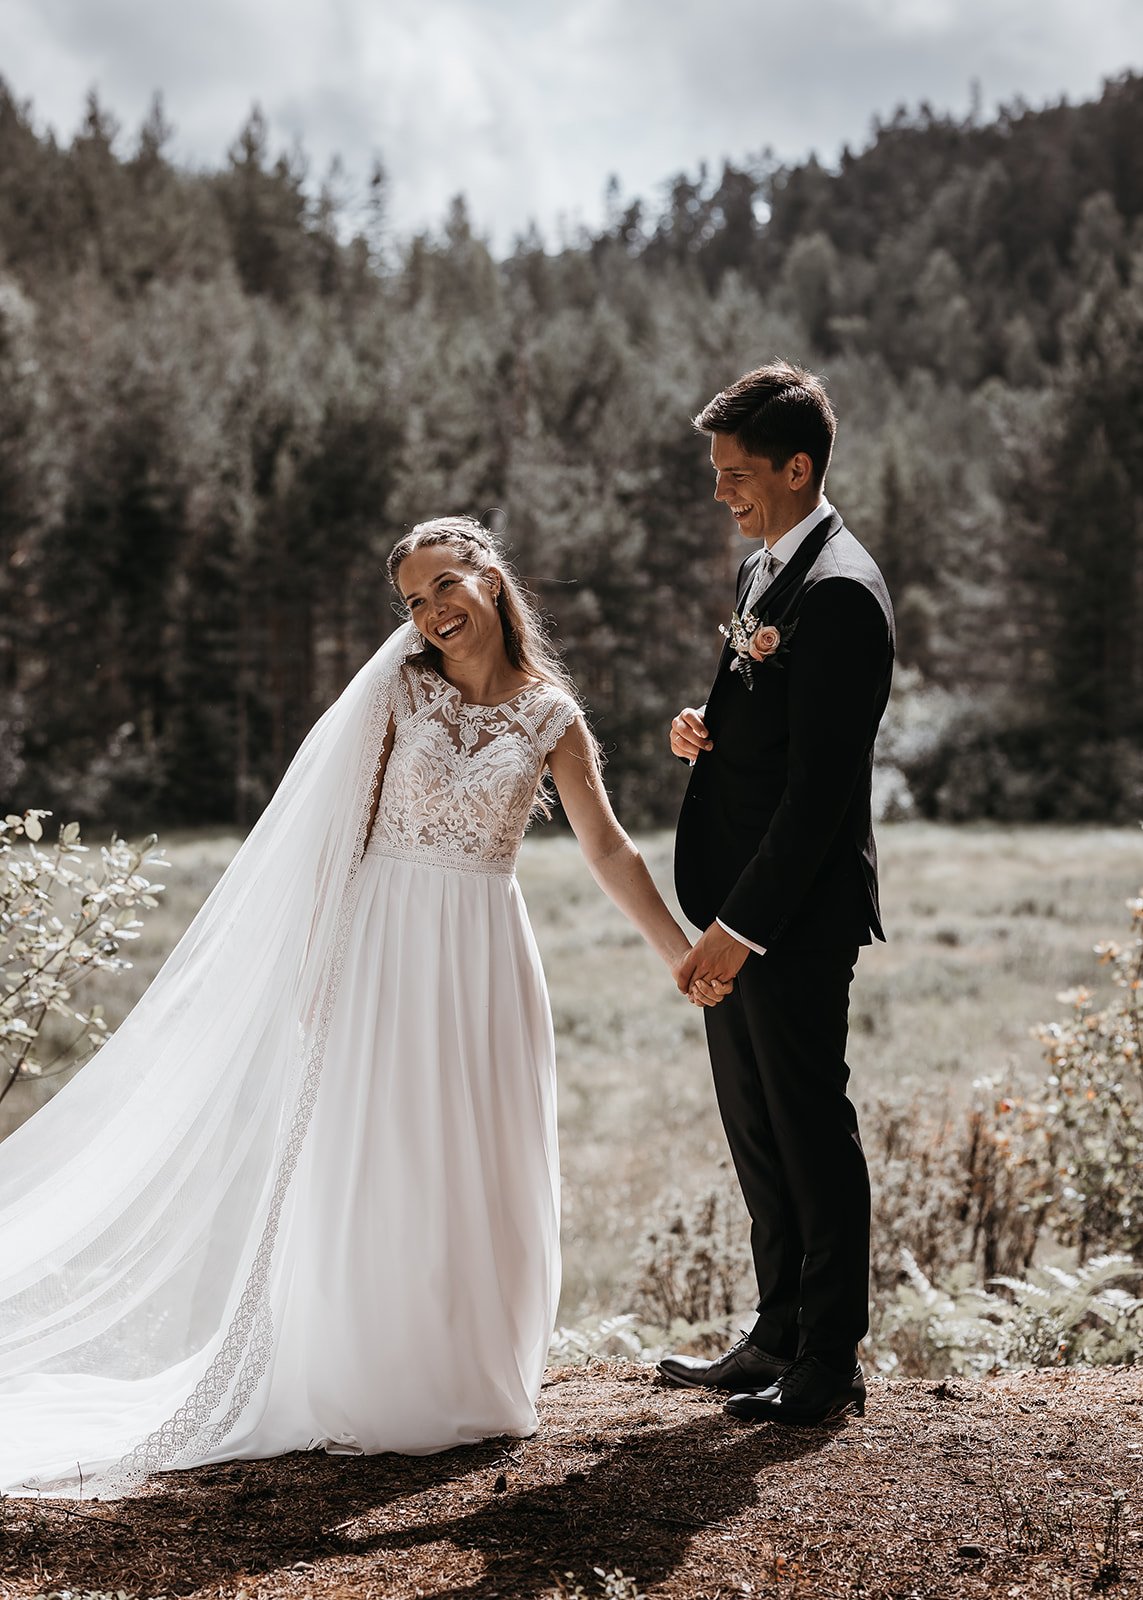 Vakker kjærlighet mellom brudepar som giftet seg i Birkeland en julidag